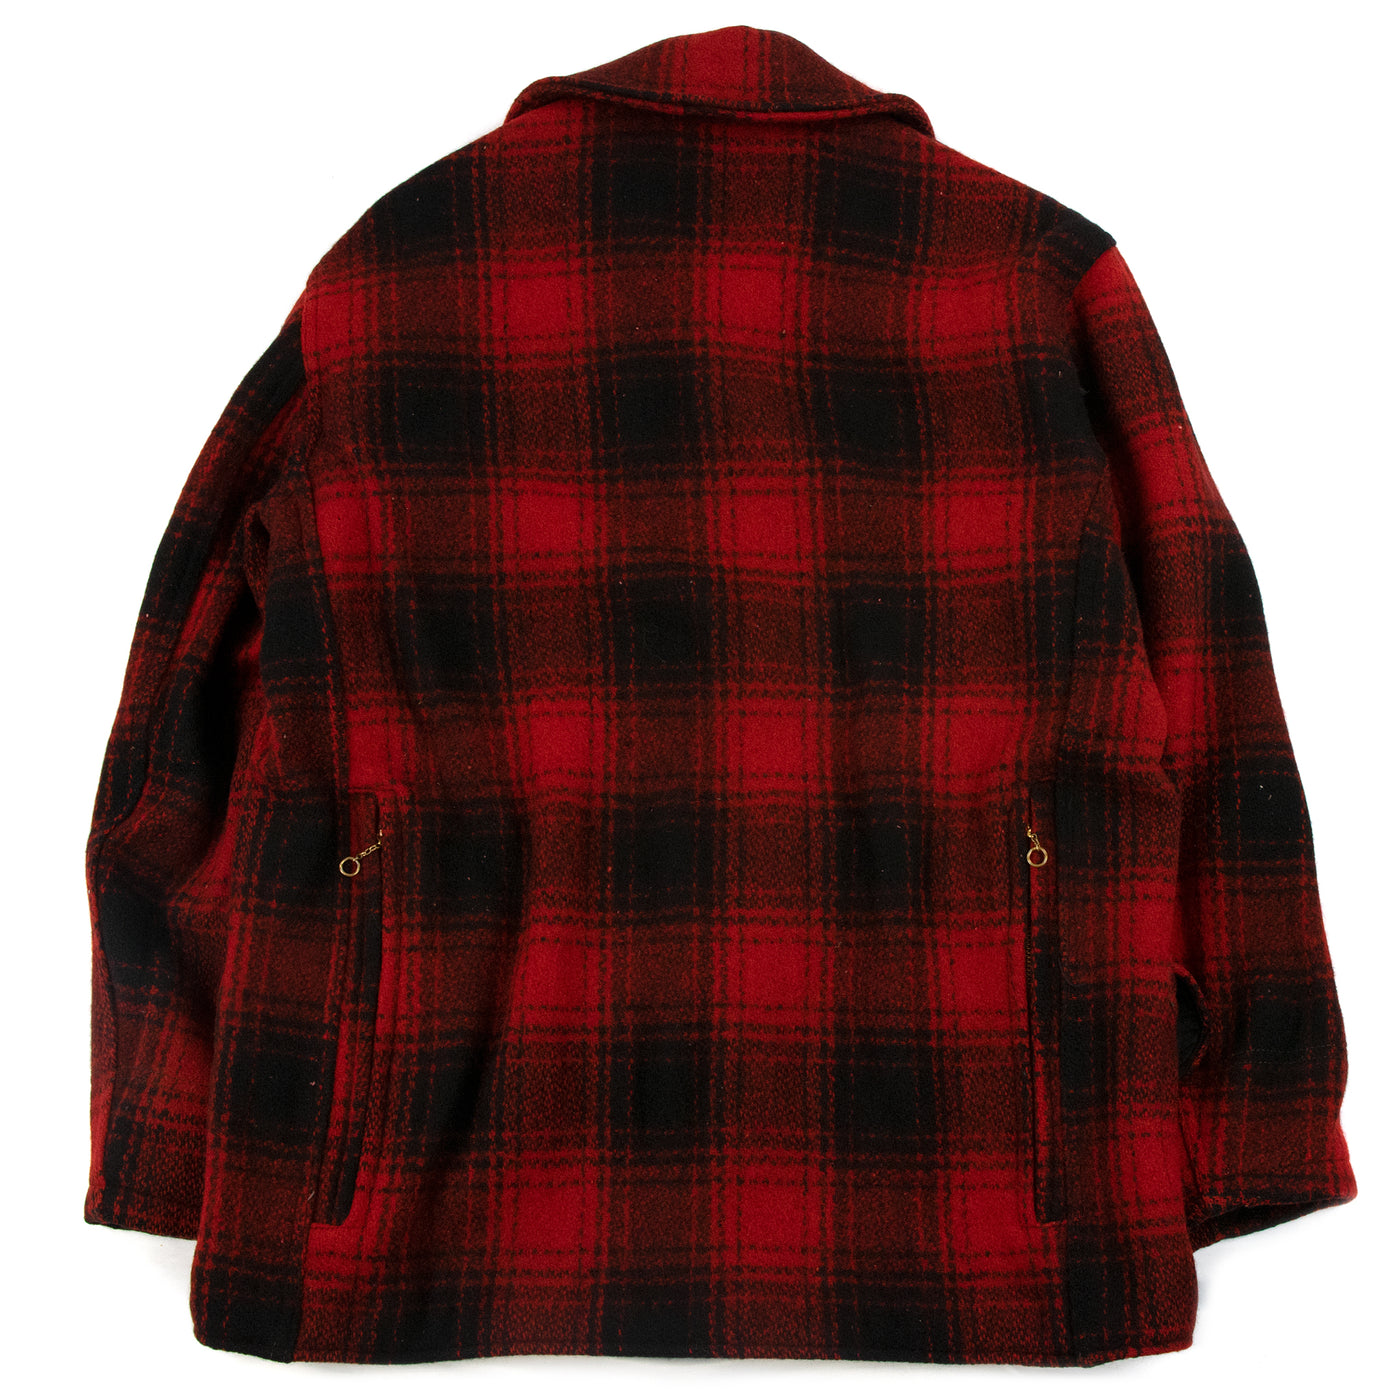 Vintage 1950's Drybak Wool Hunting Plaid Mackinaw Jacket Made In U.S.A - M Back